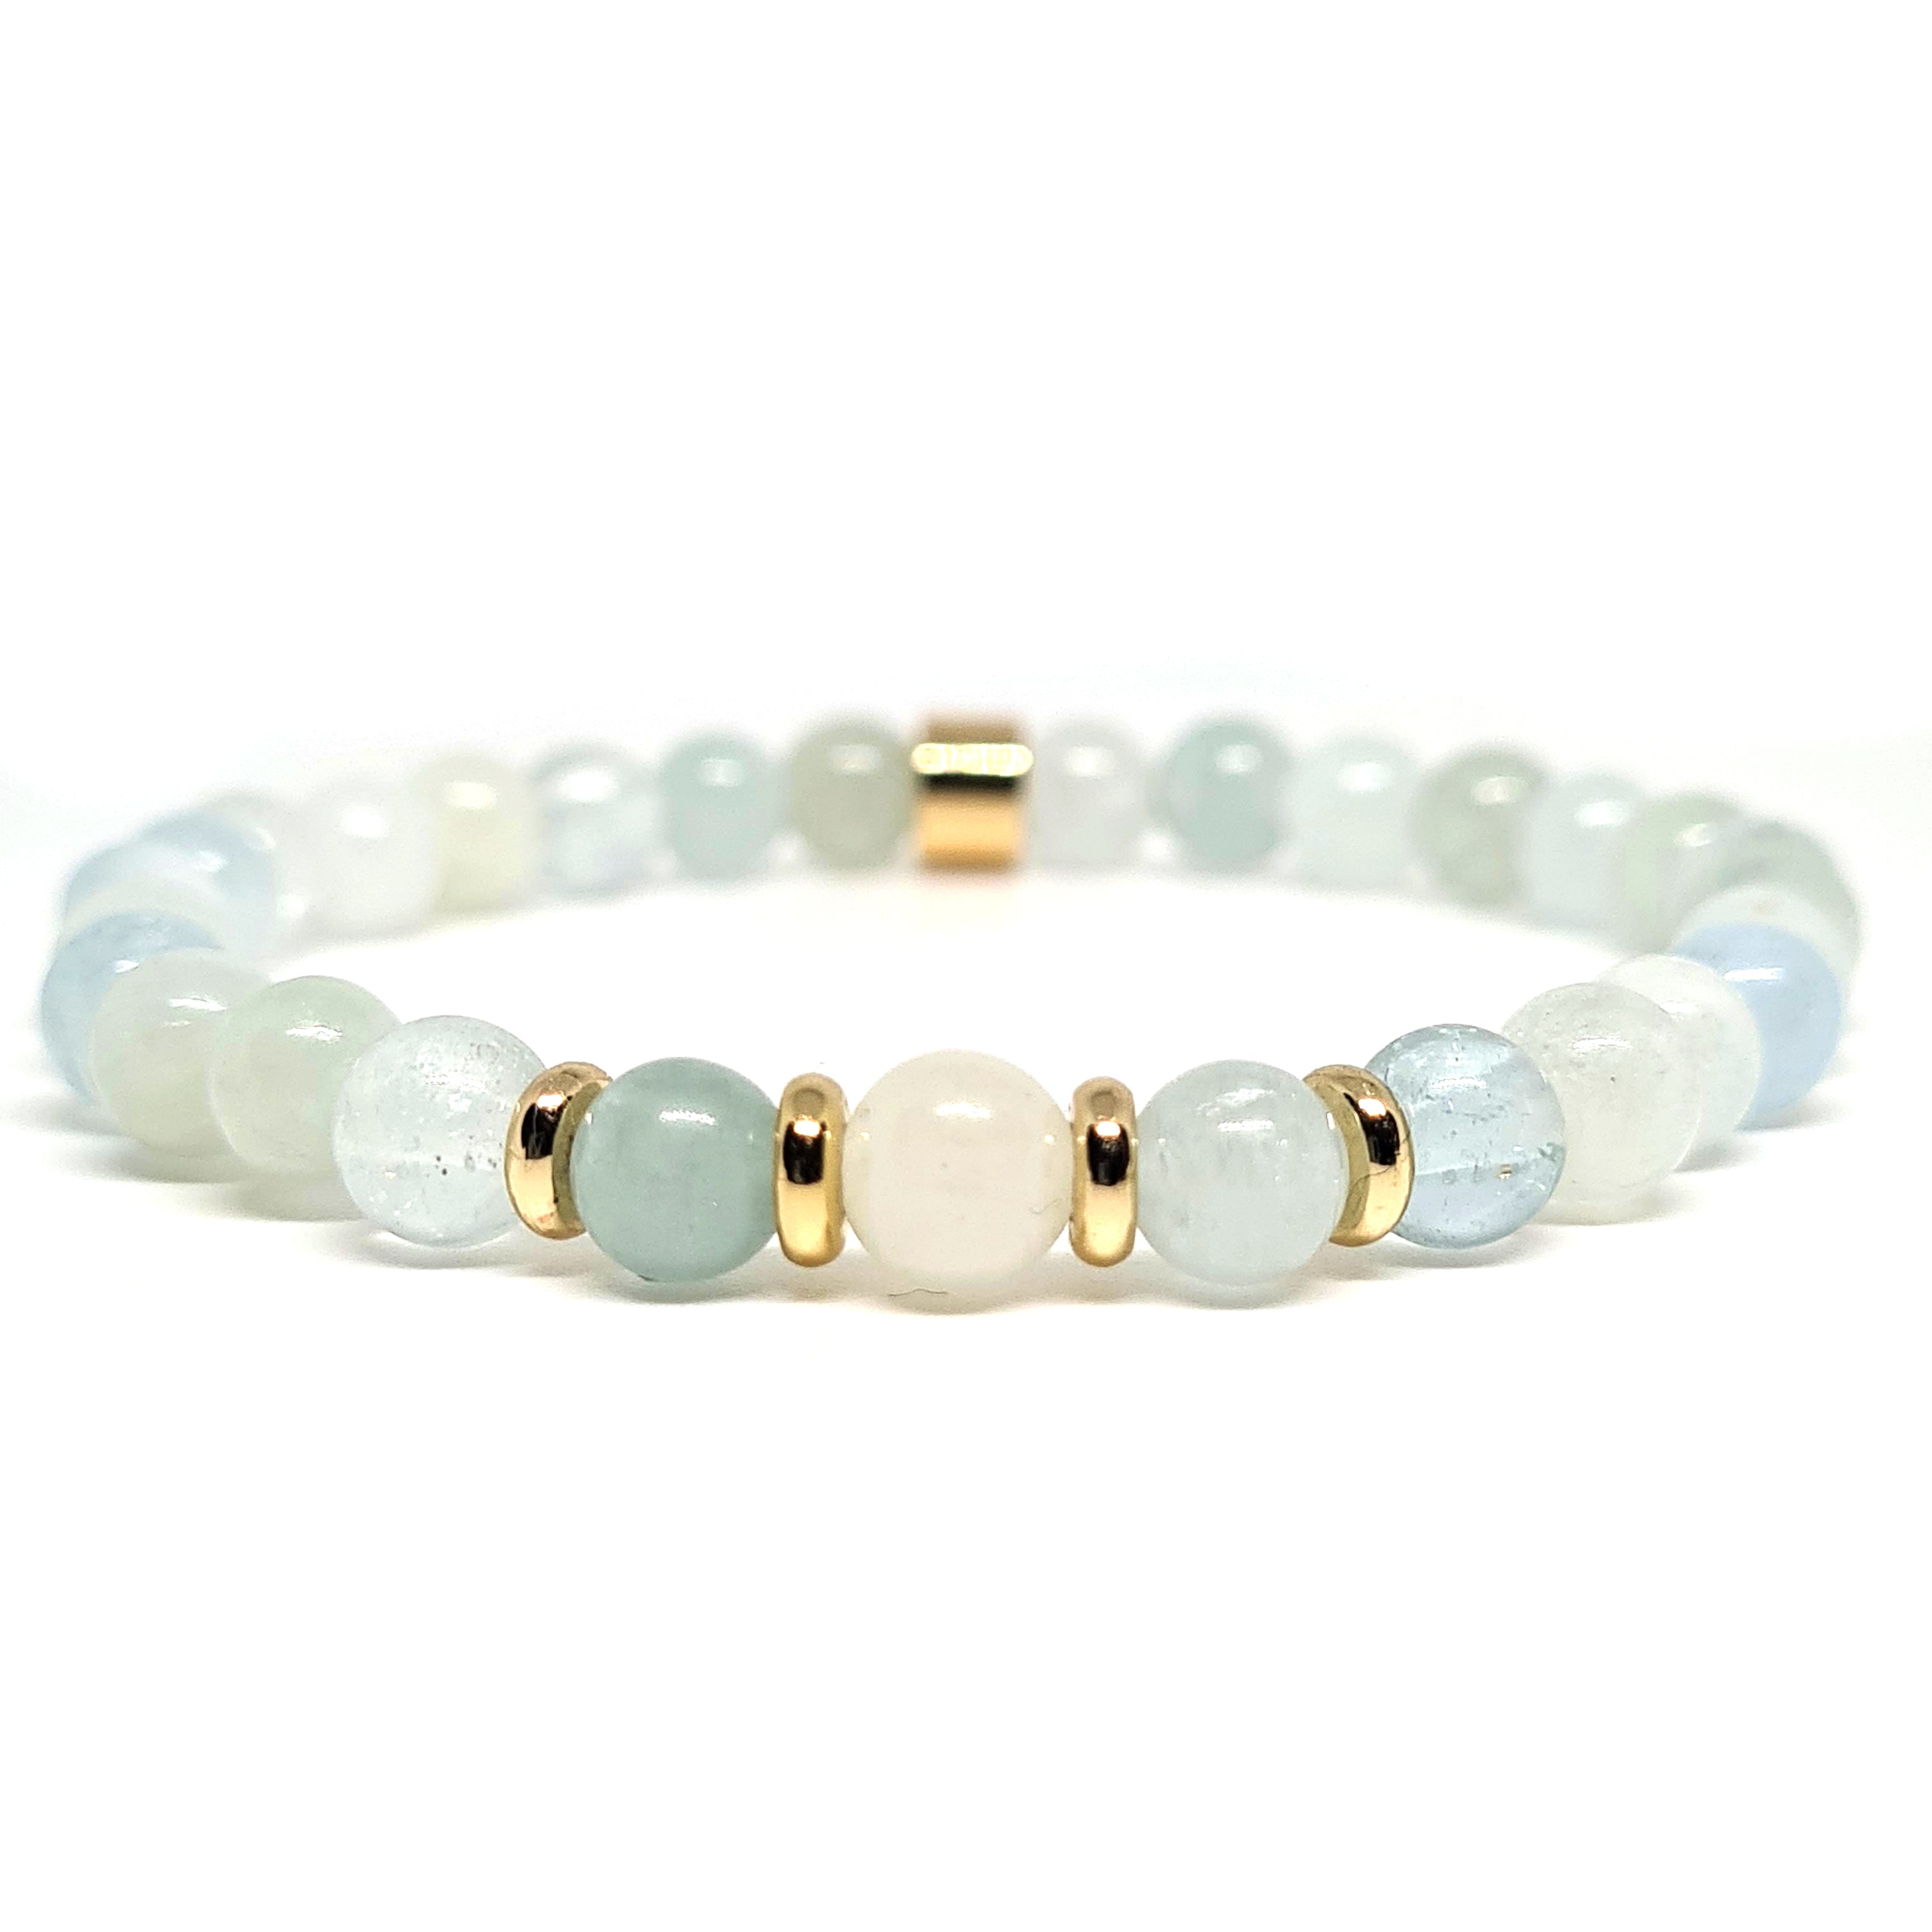 Aquamarine gemstone bracelet in 6mm beads with gold accessories